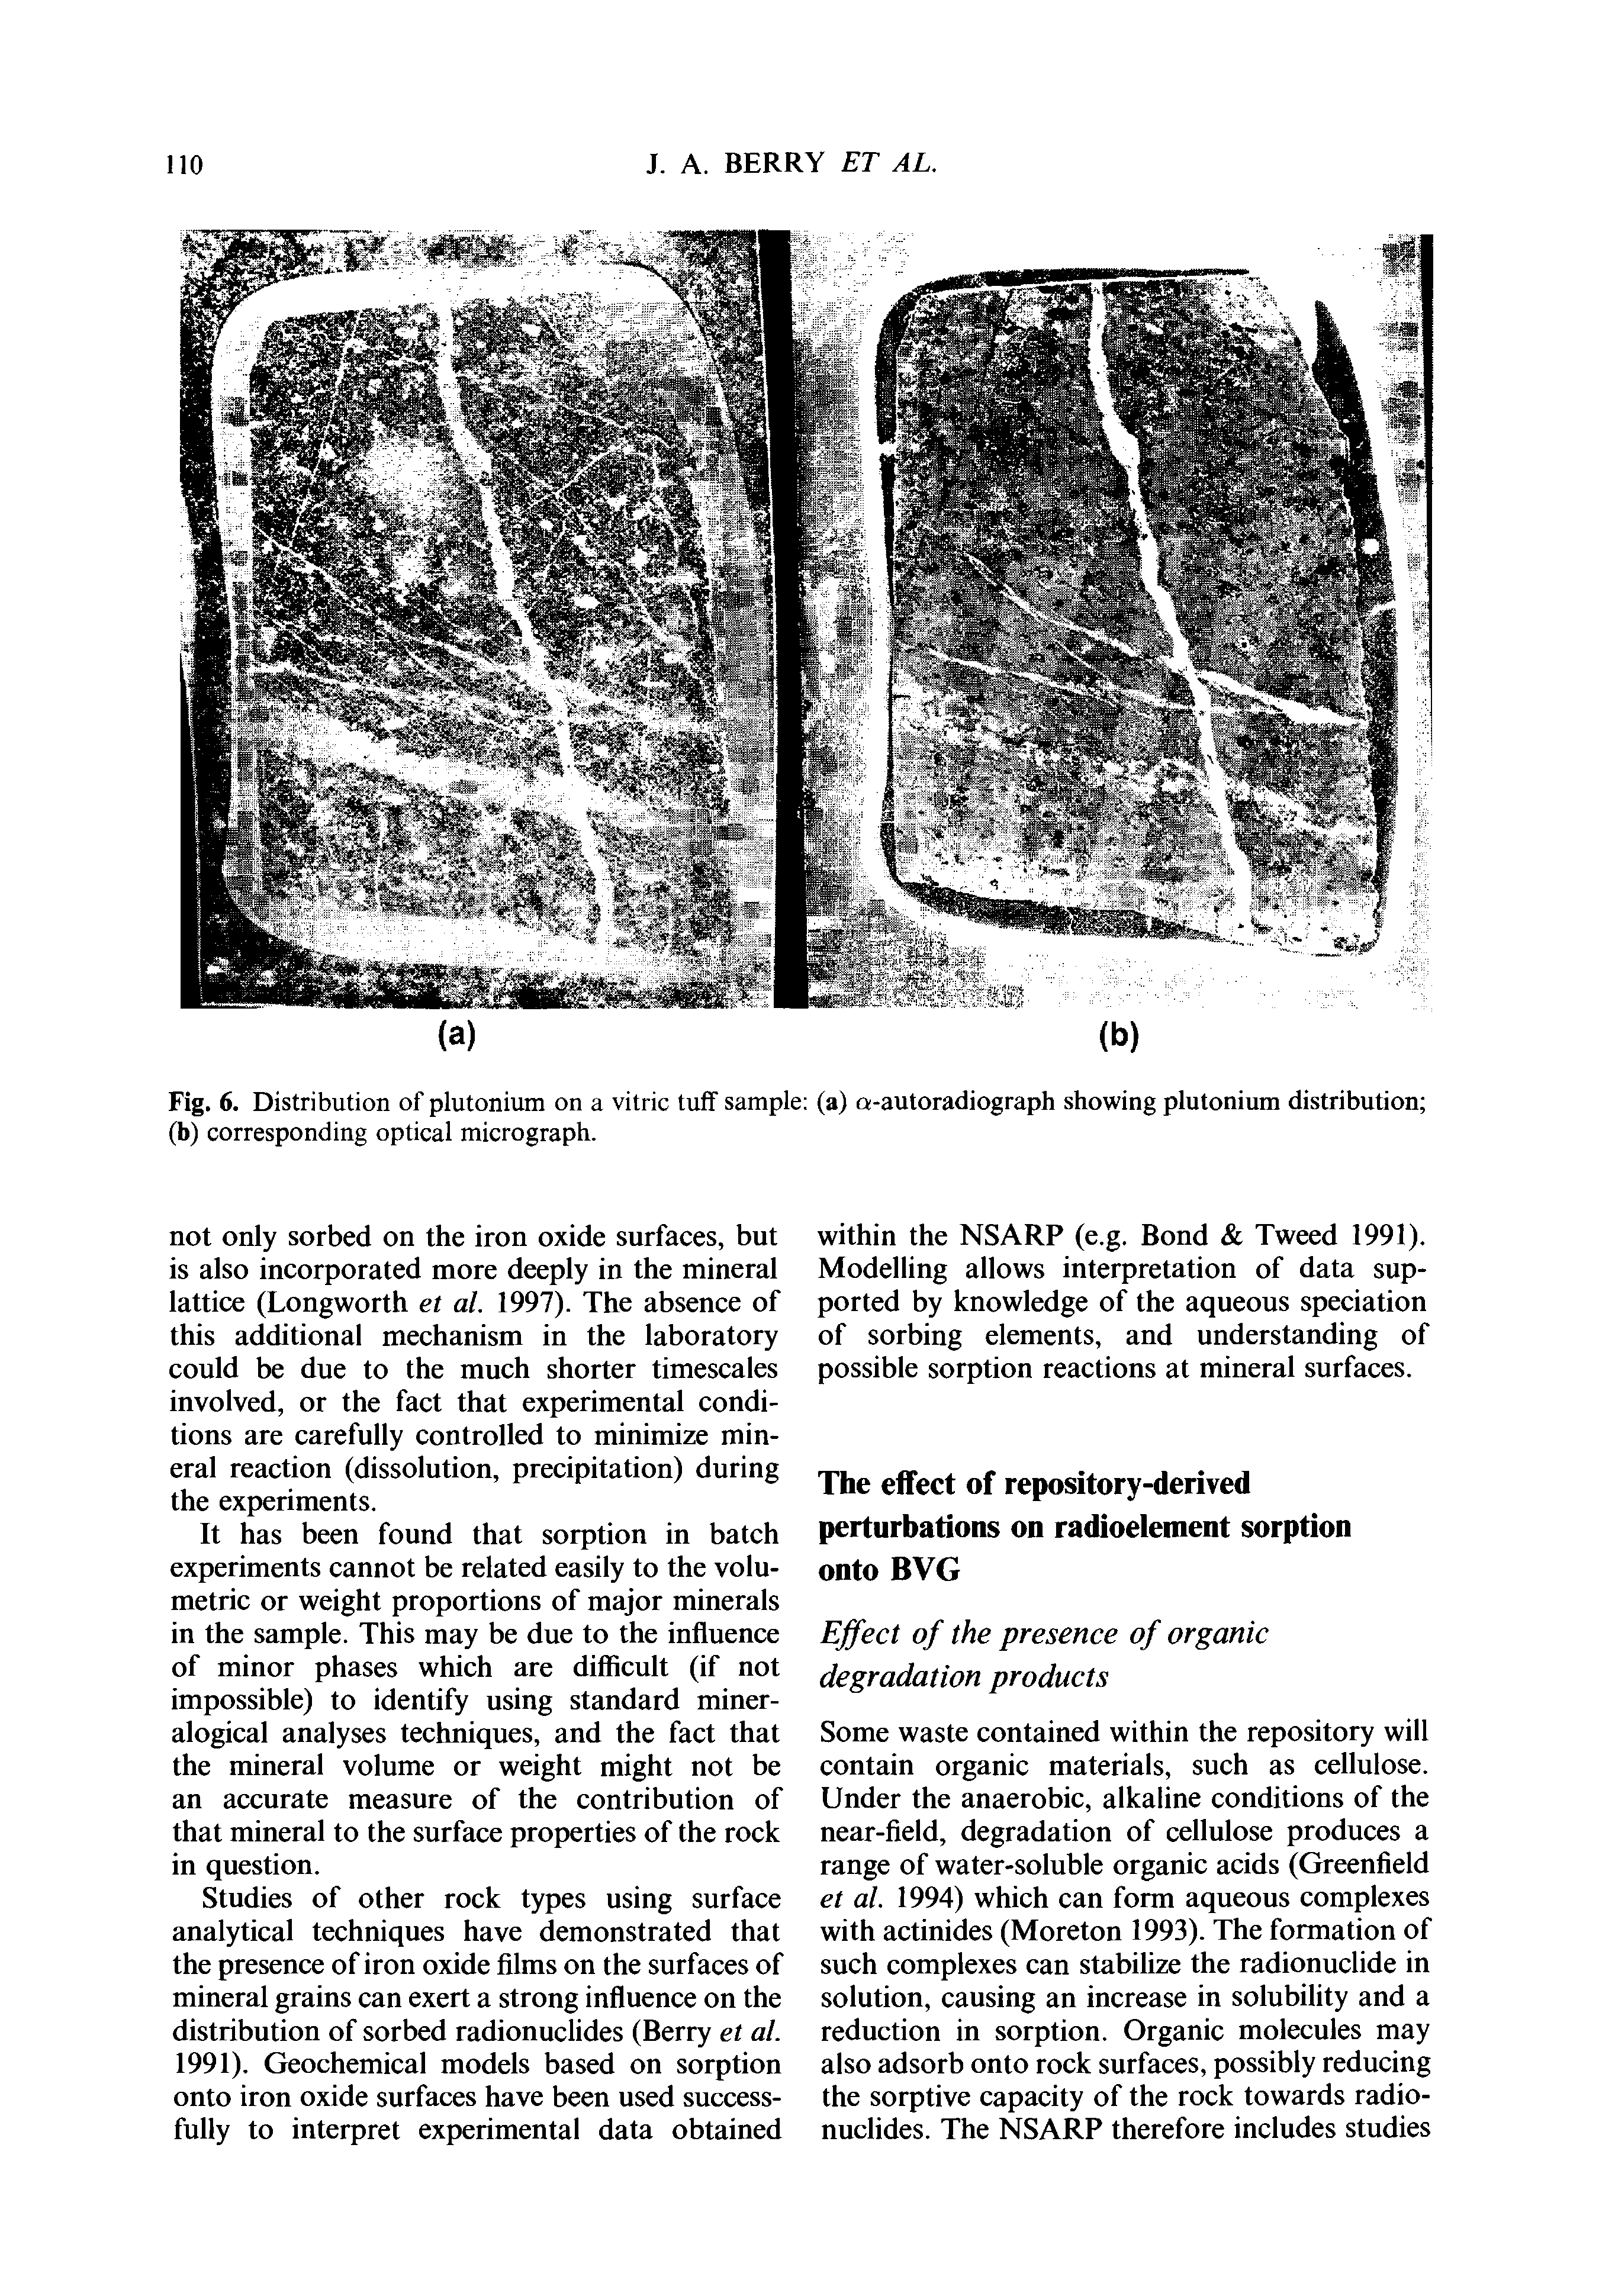 Fig. 6. Distribution of plutonium on a vitric tuff sample (a) a-autoradiograph showing plutonium distribution (b) corresponding optical micrograph.